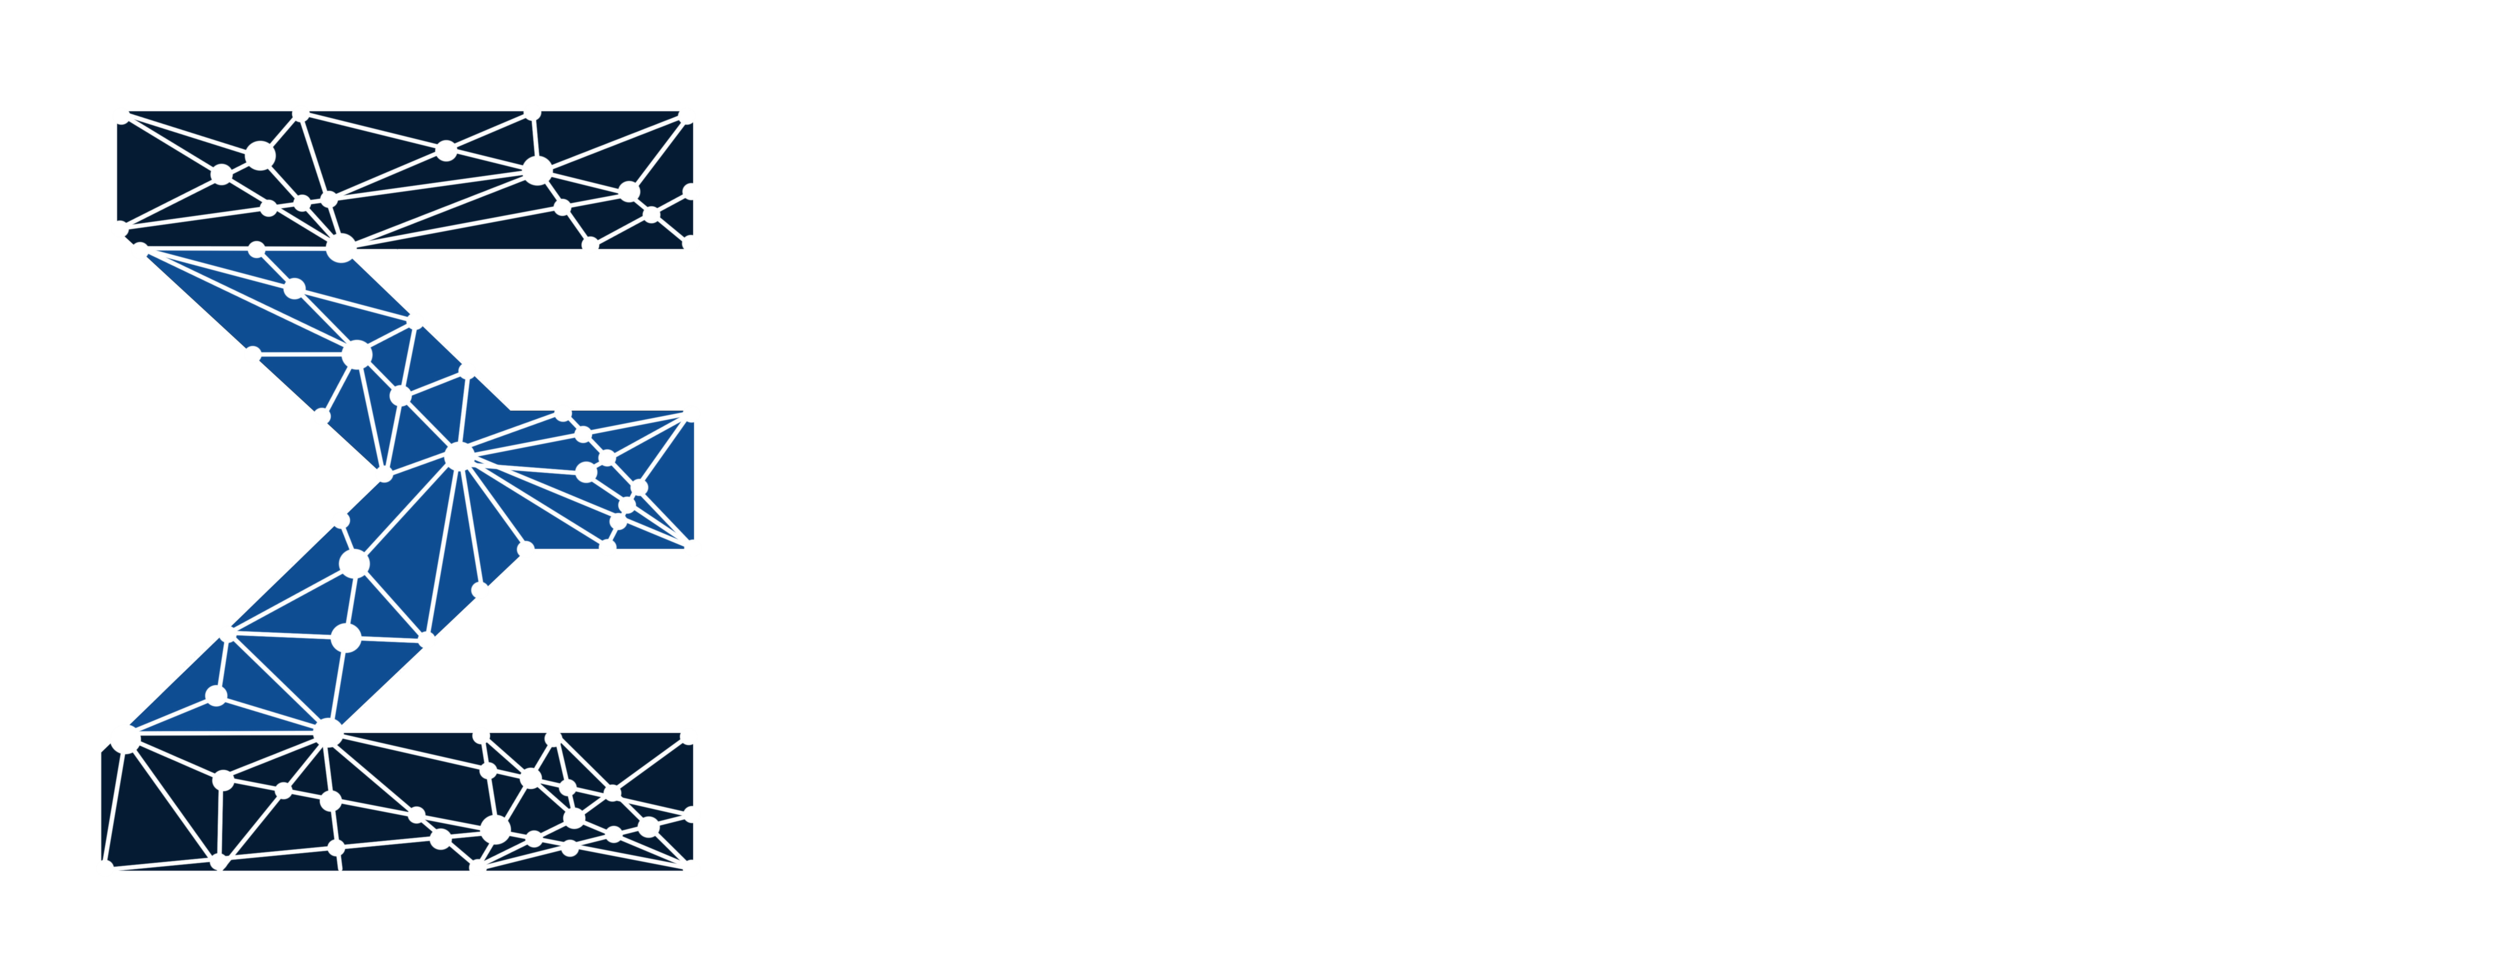 Yale Entrepreneurial Society